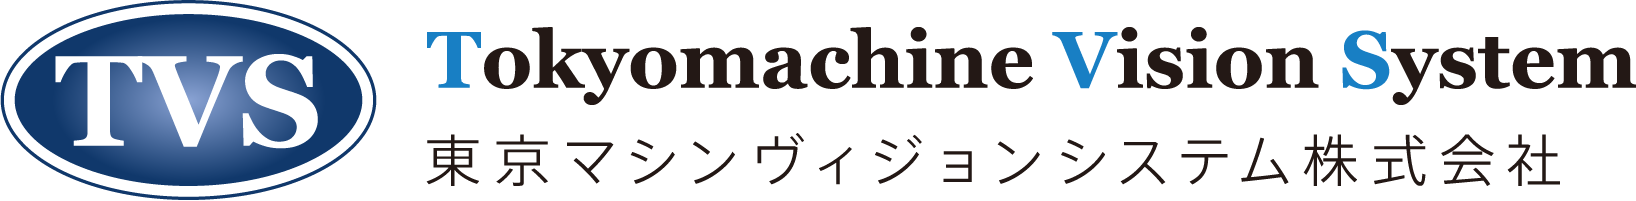 Tokyomachine Vision System Inc.